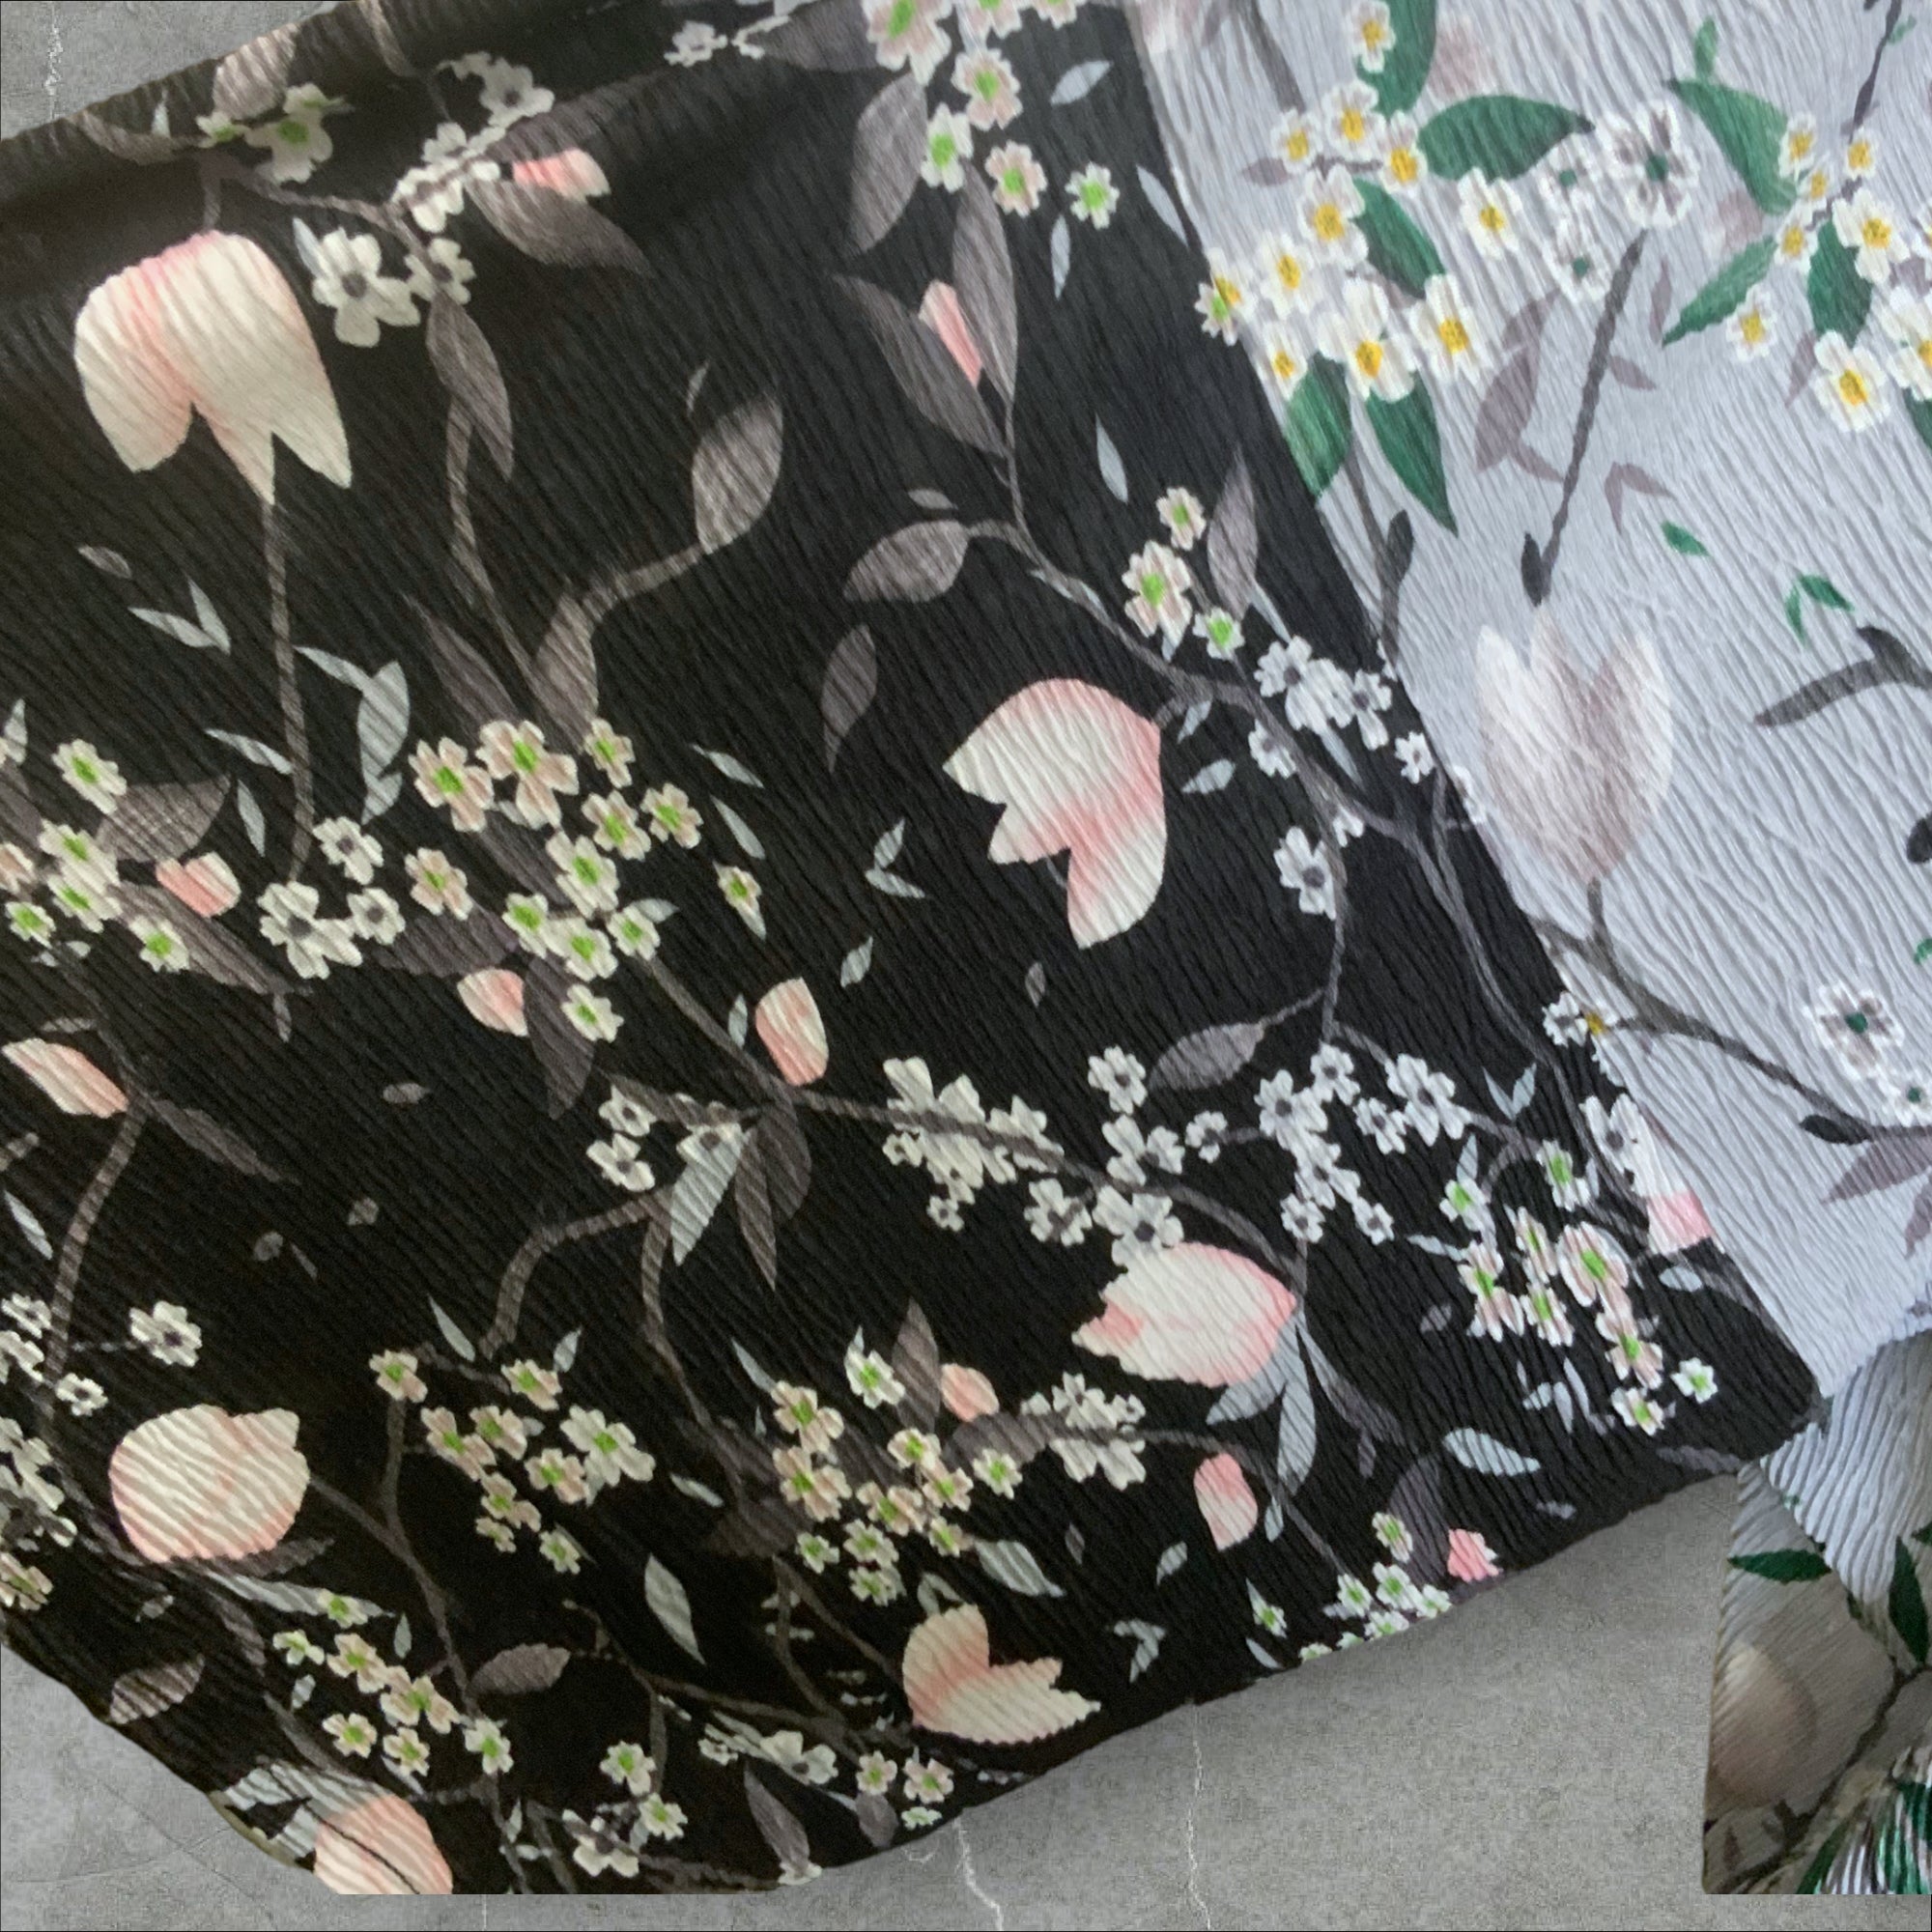 SARA Kimono Jacket Black/Blue-Grey Crinkled Poly Floral cover Up - Size 4XL